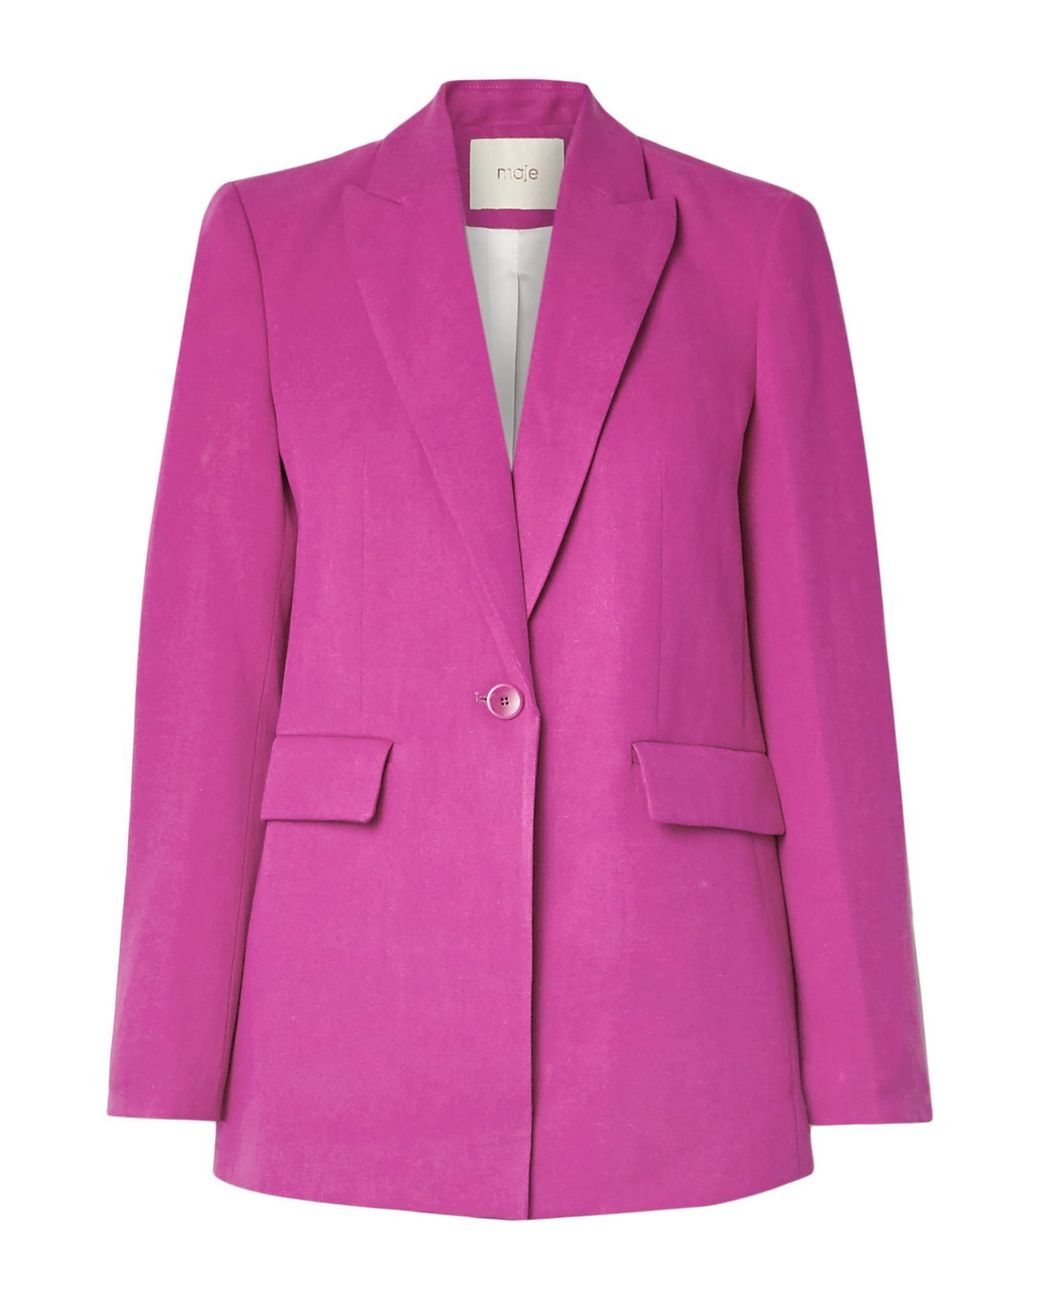 Maje Suit Jacket in Fuchsia (Pink) - Lyst